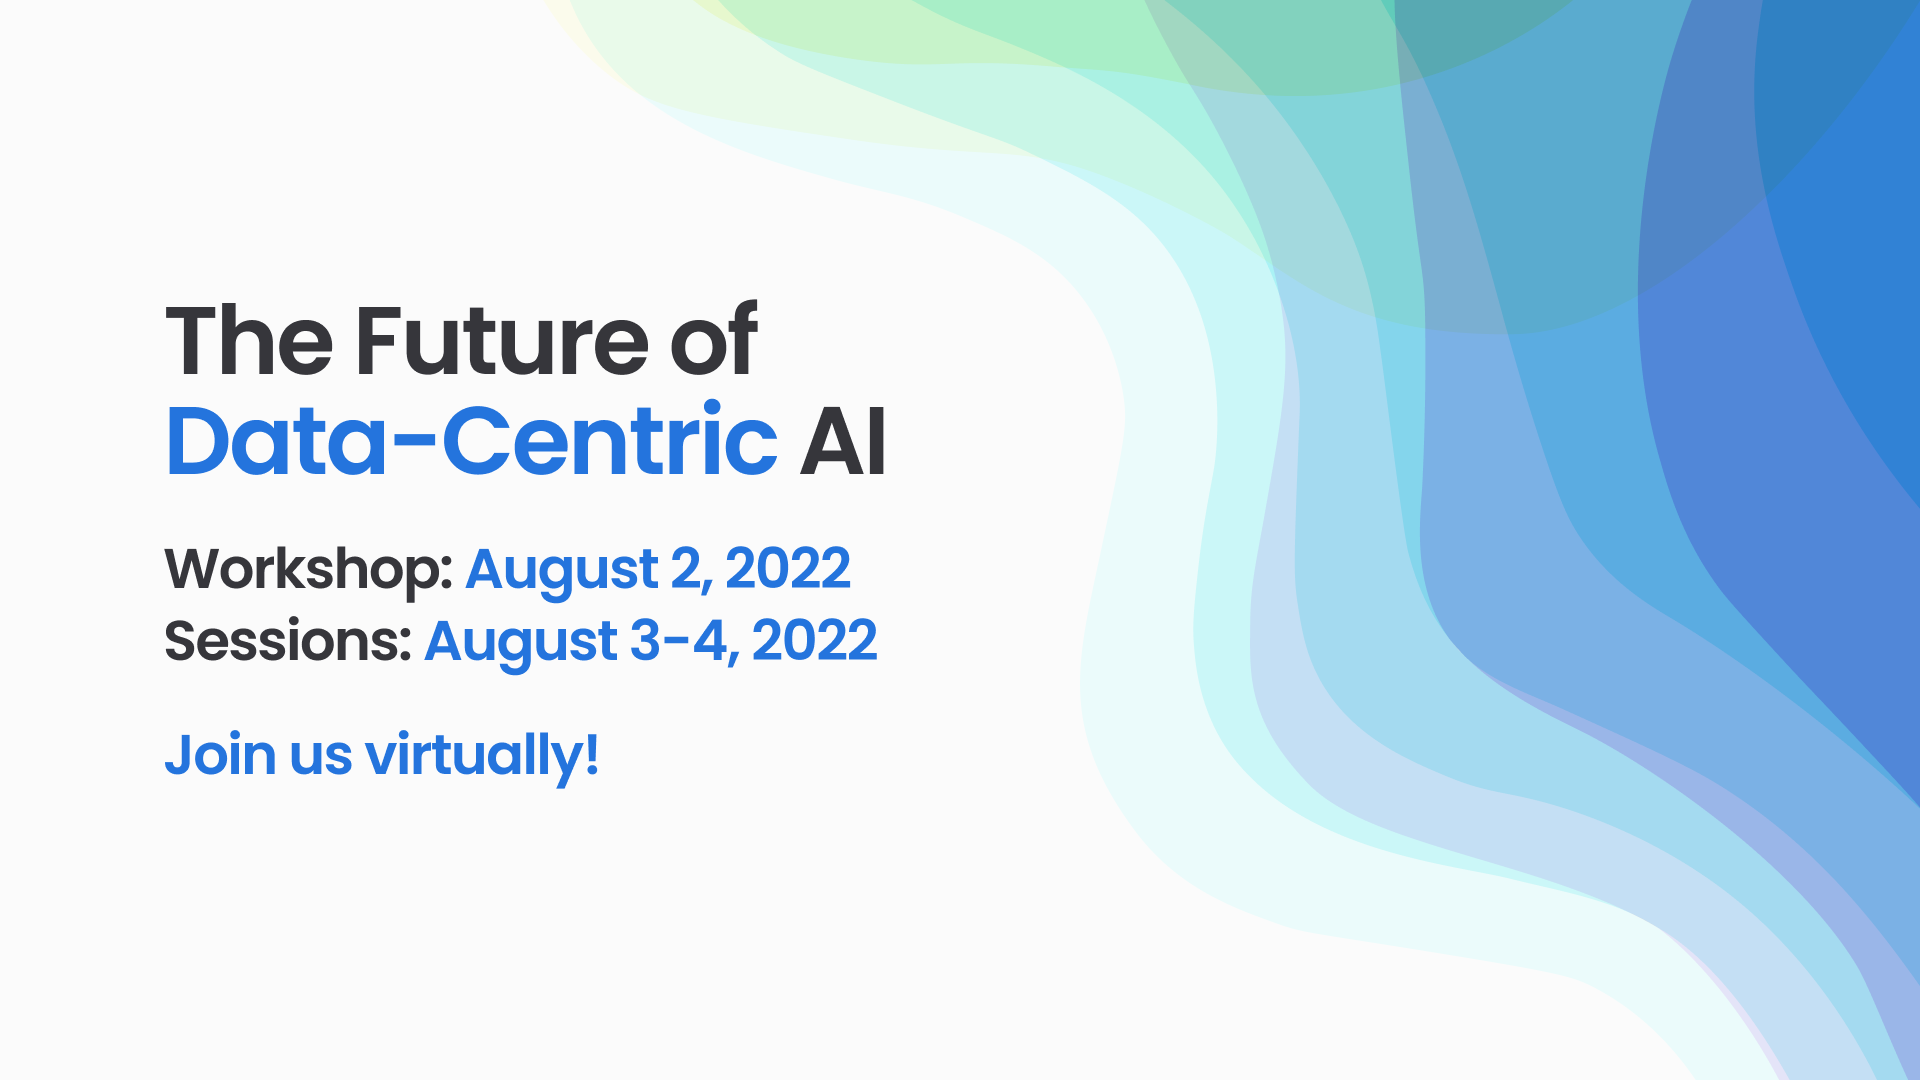 The Future of Data-Centric AI